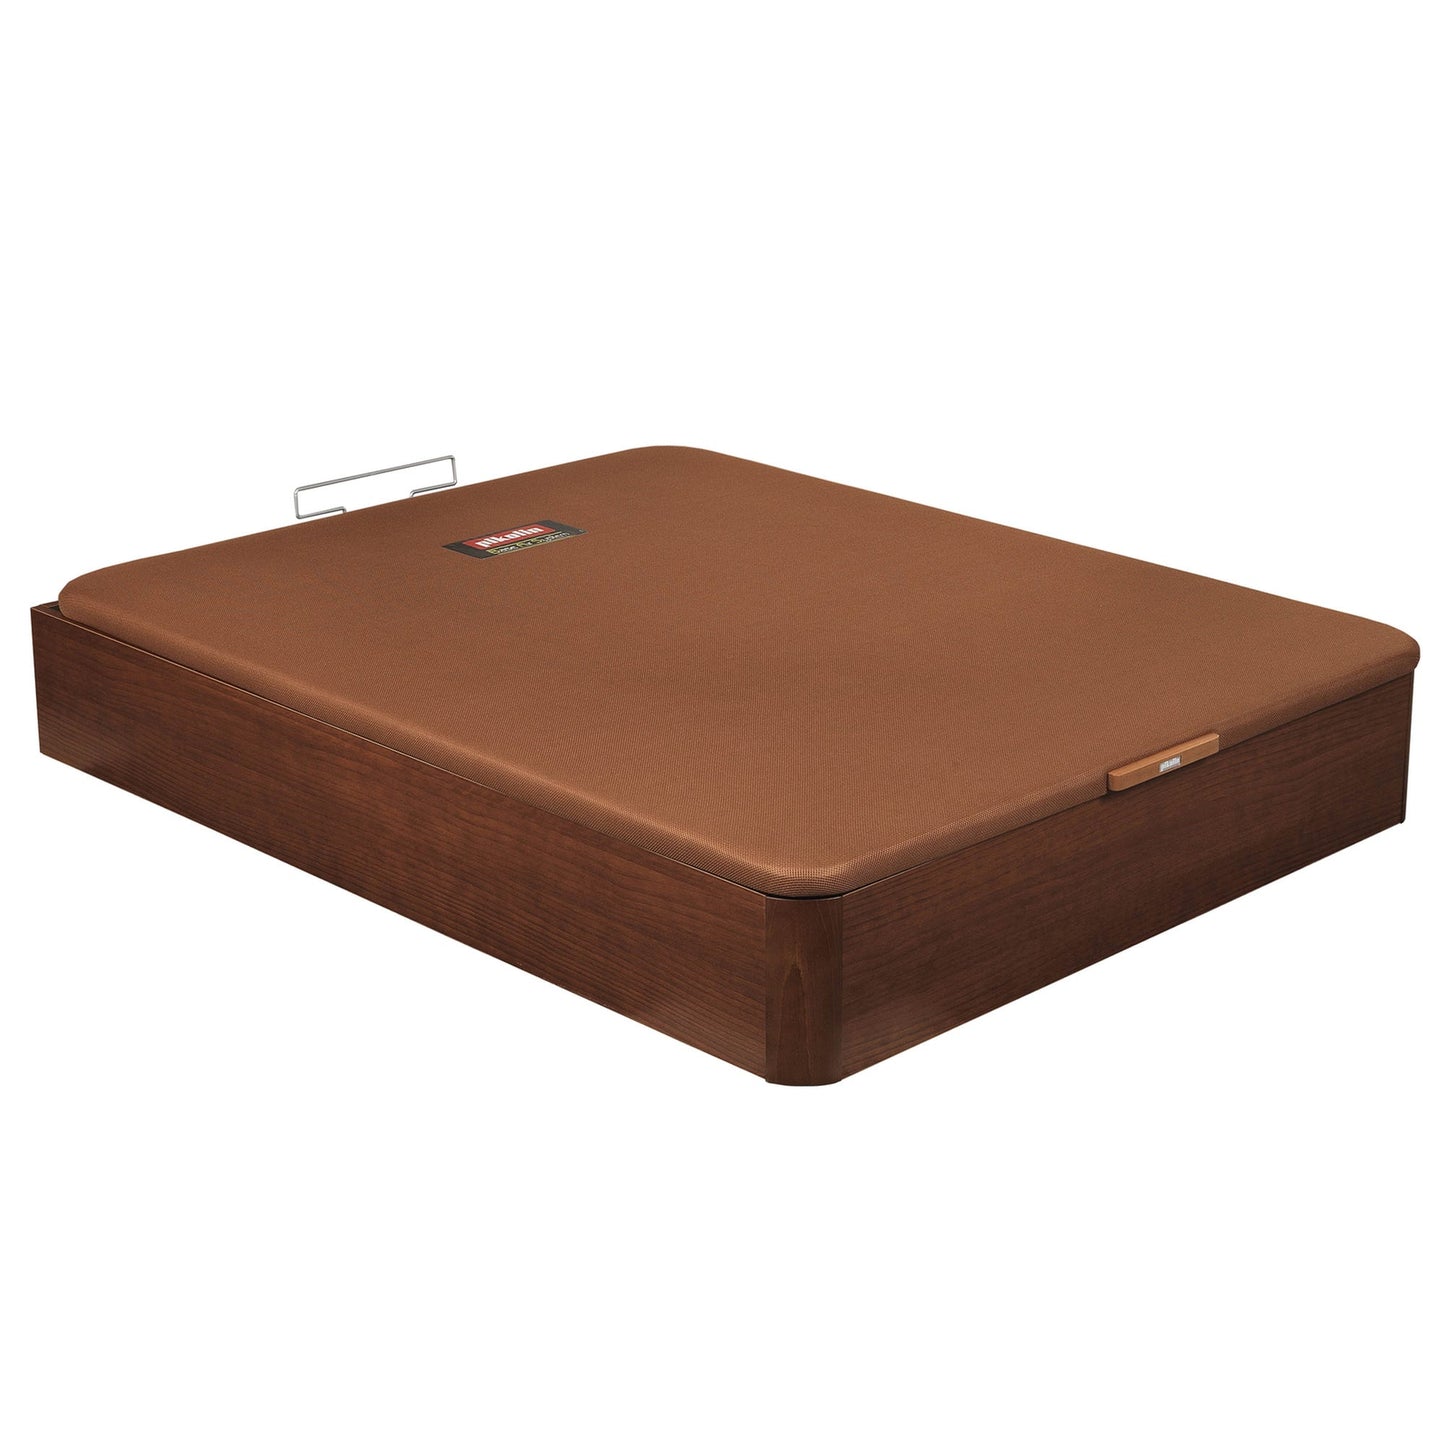 Canapé abatible de madera de color cerezo - NATURBOX CEREZO - 80x200